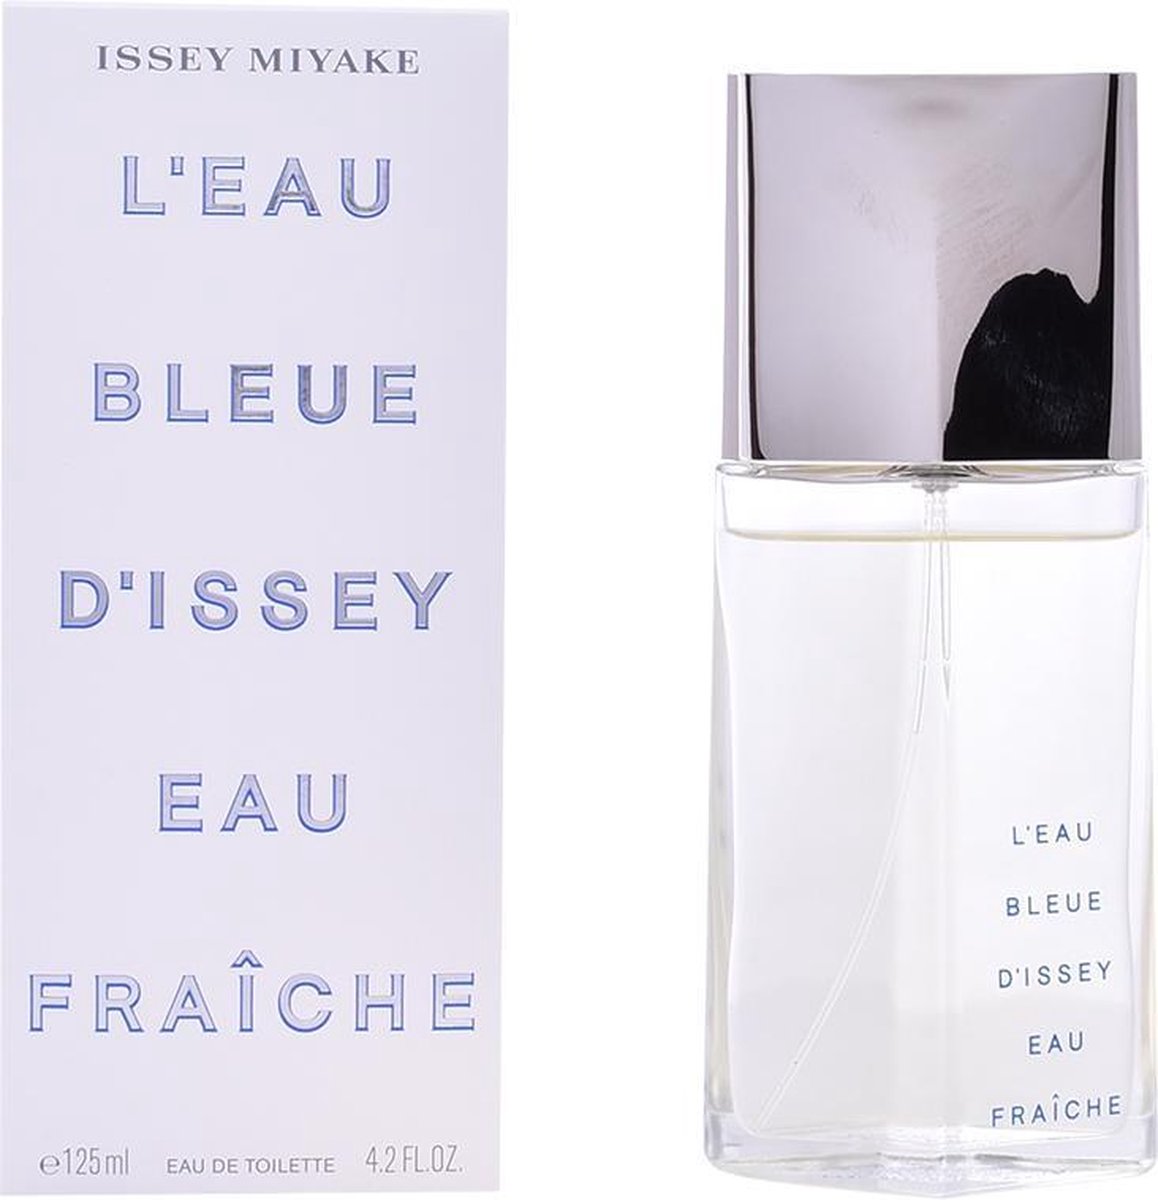 ISSEY MIYAKE L'Eau Bleue D'Issey Eau Fraiche Eau de Toilette Spray 2.5oz  75ml BX